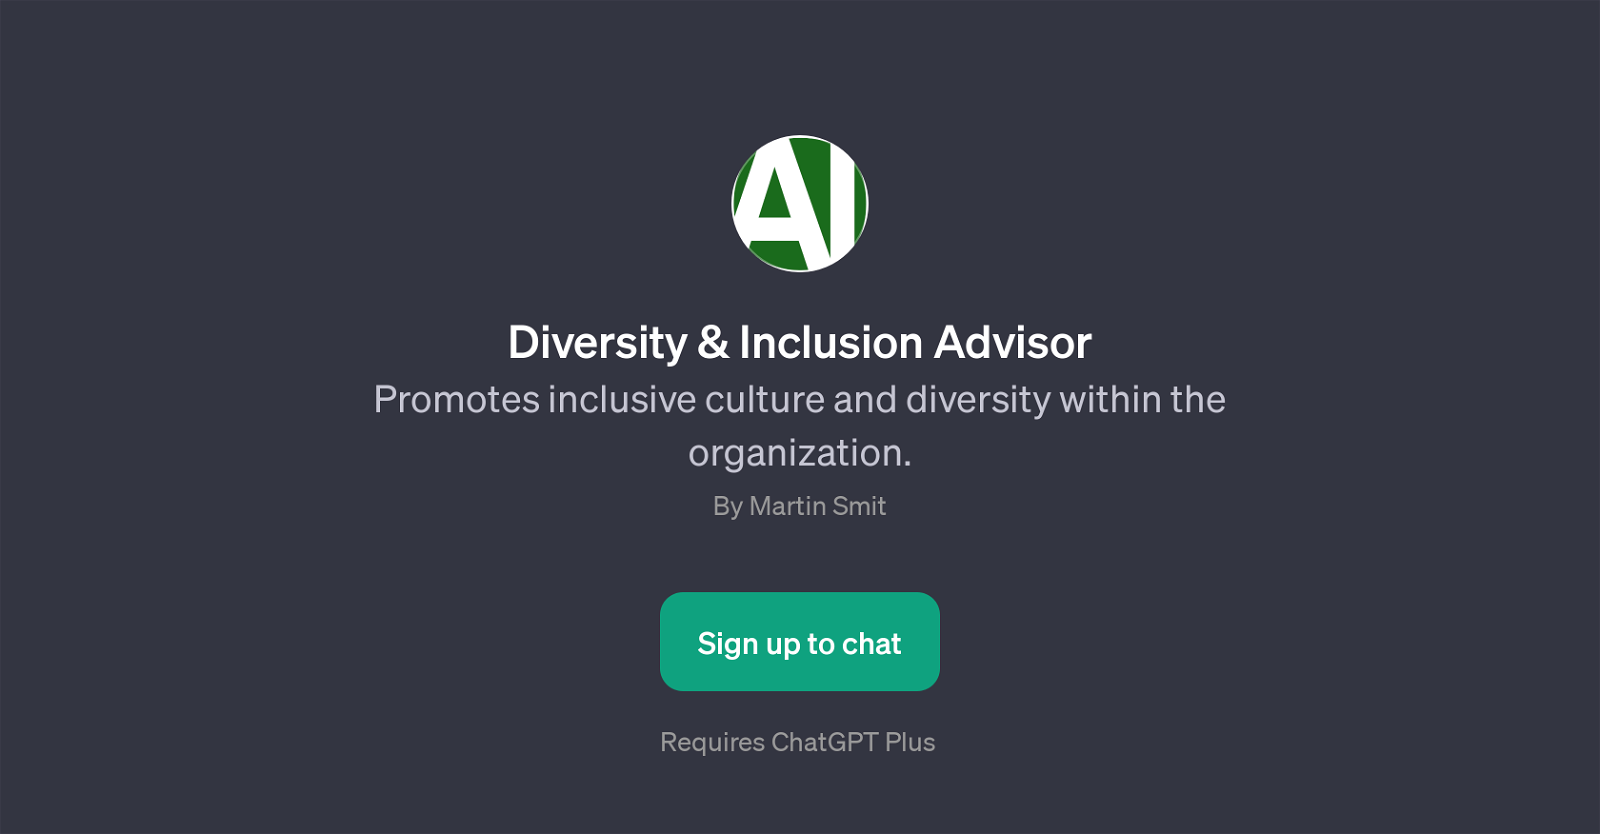 Diversity & Inclusion Advisor website